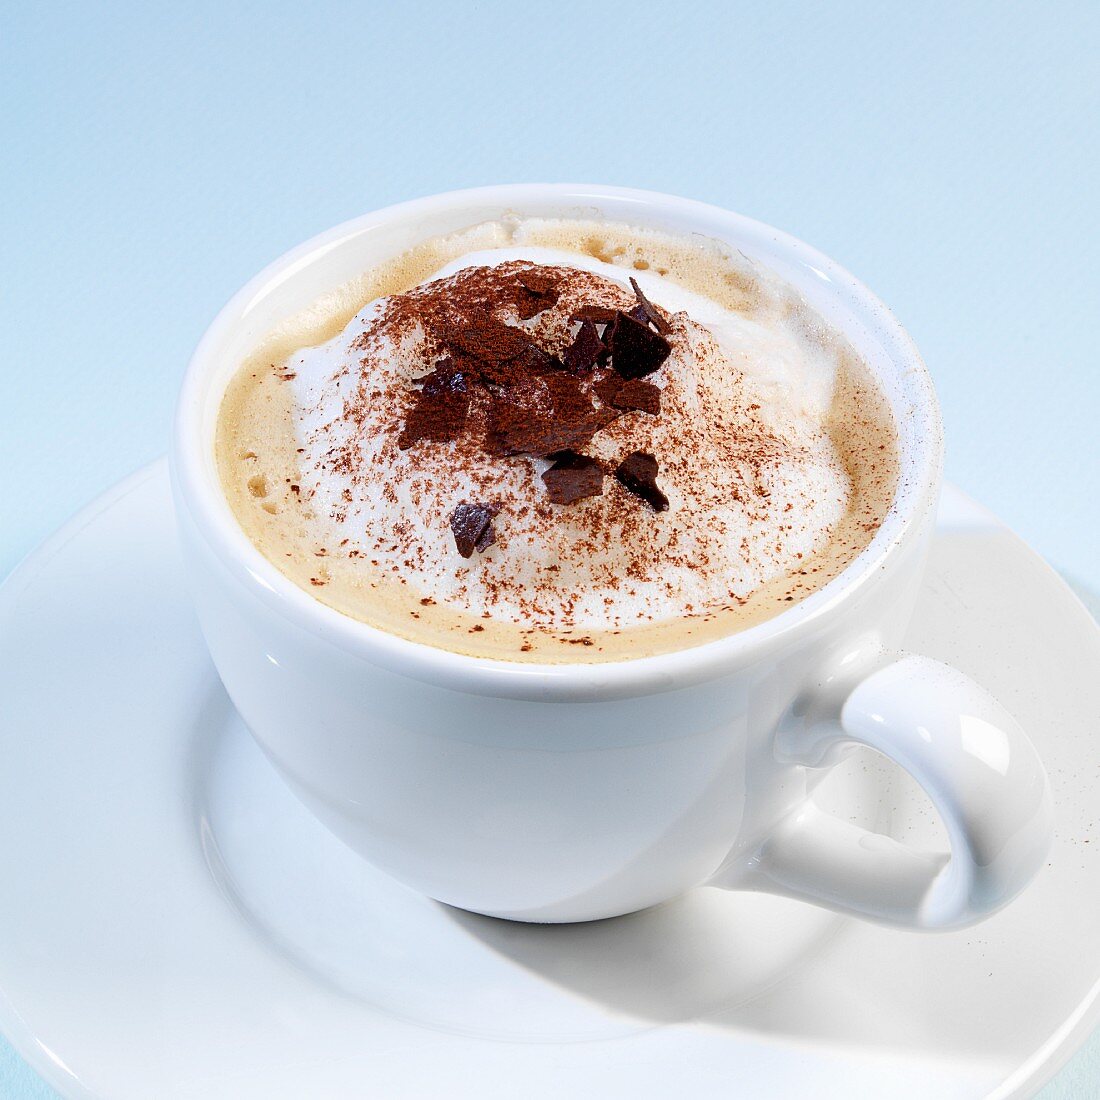 Hot chocolate with milk foam